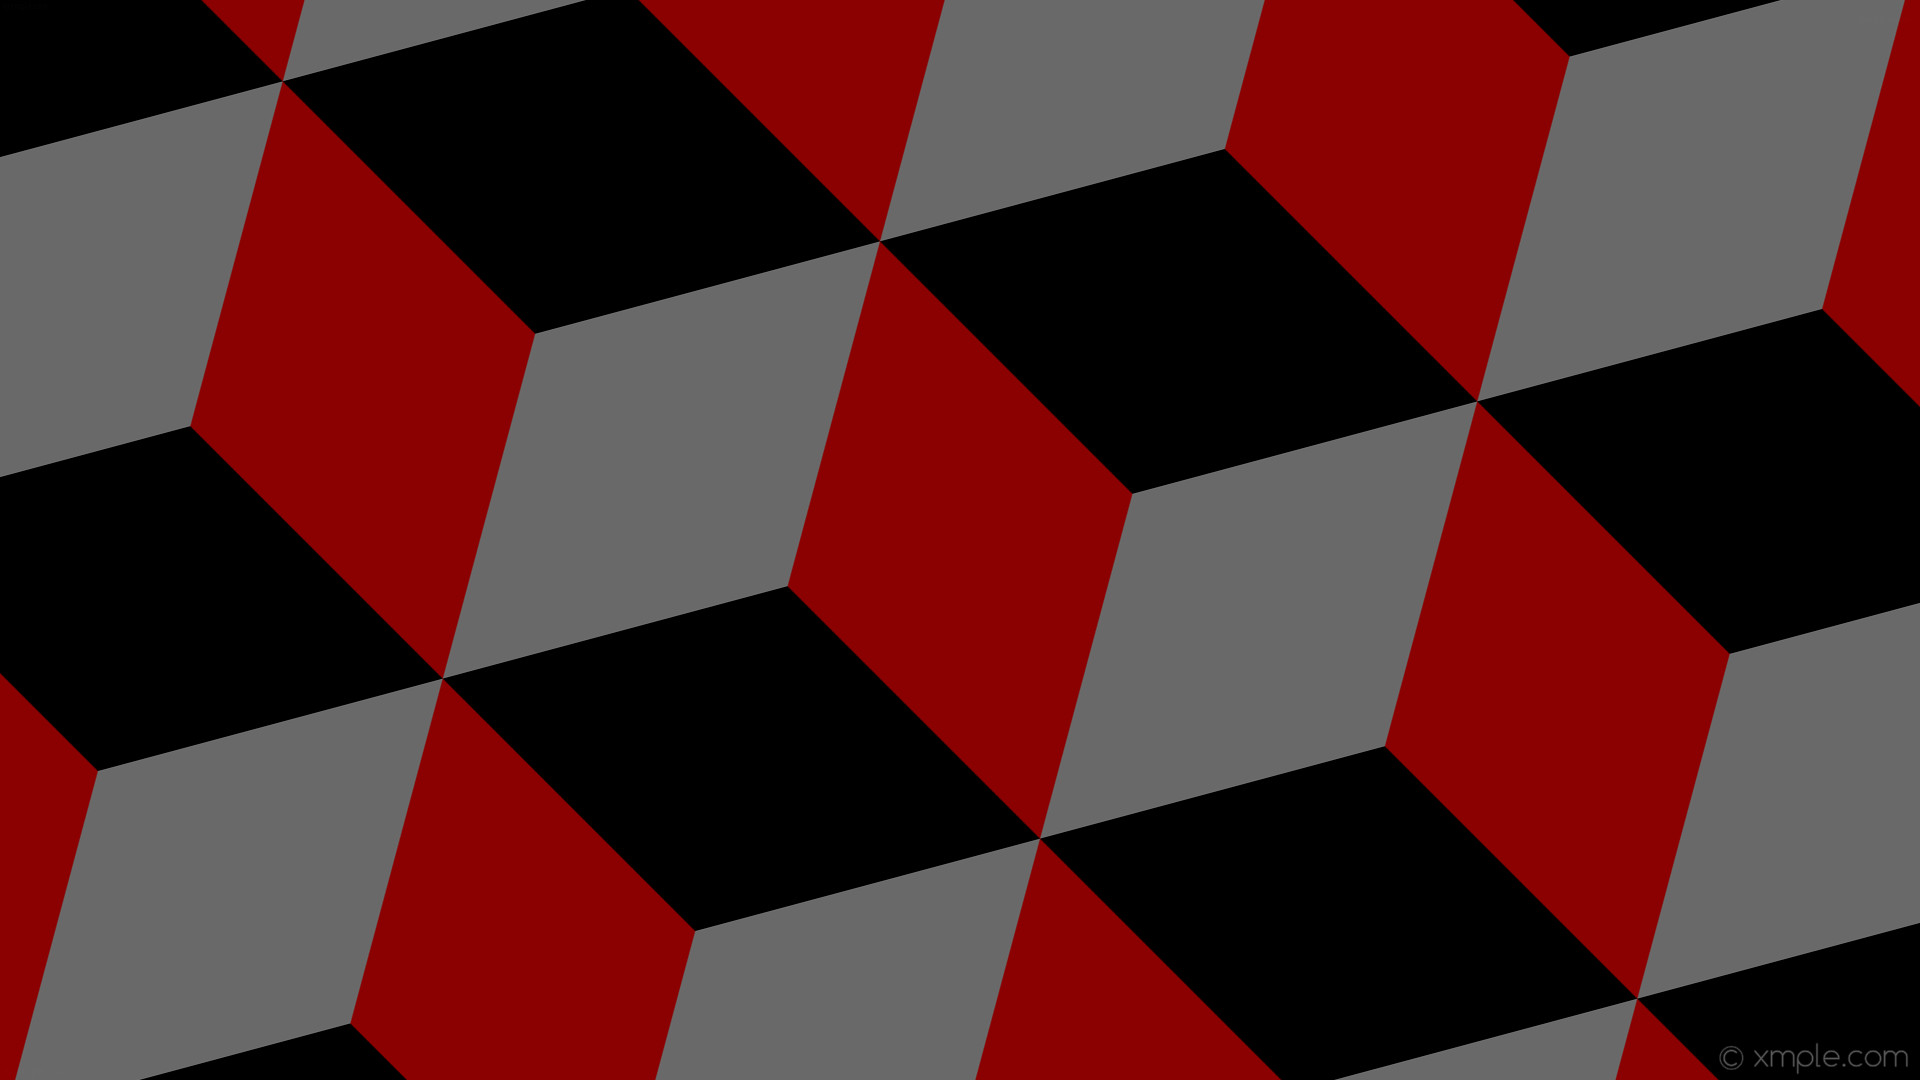 1920x1080 wallpaper red grey 3d cubes black dark red dim gray #8b0000 #696969 #000000